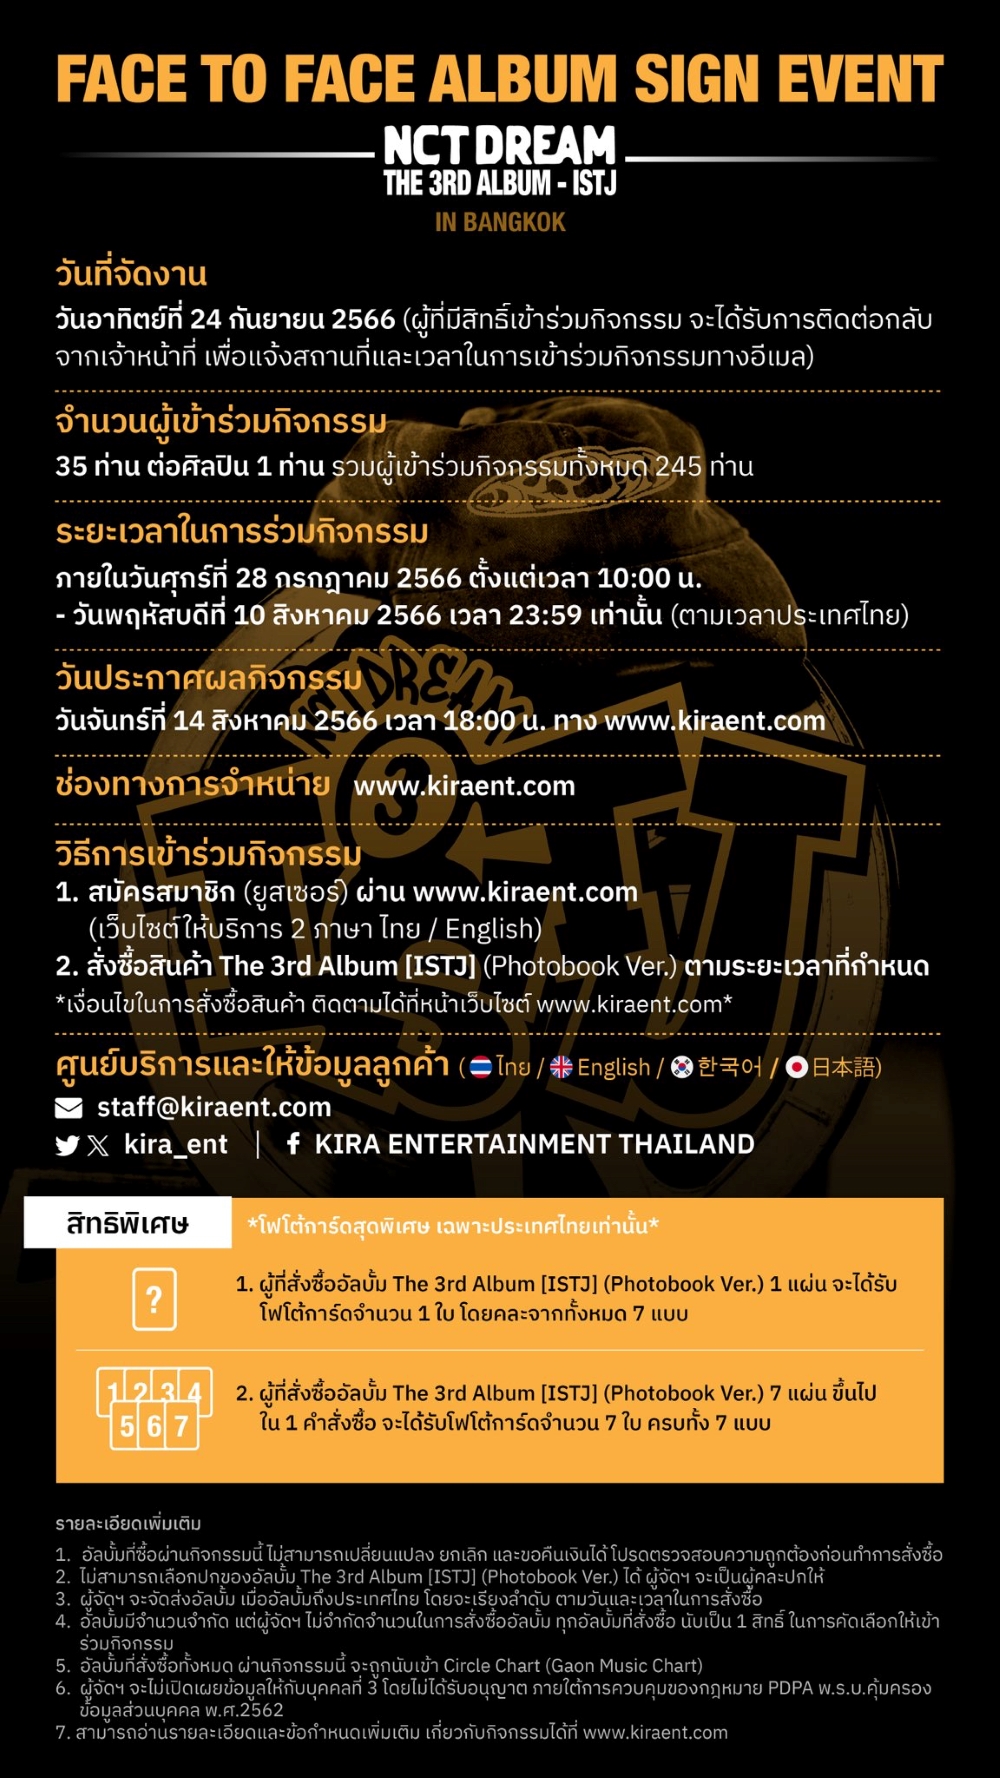 FACE TO FACE ALBUM SIGN EVENT NCT DREAM - The 3rd Album [ISTJ] In Bangkok